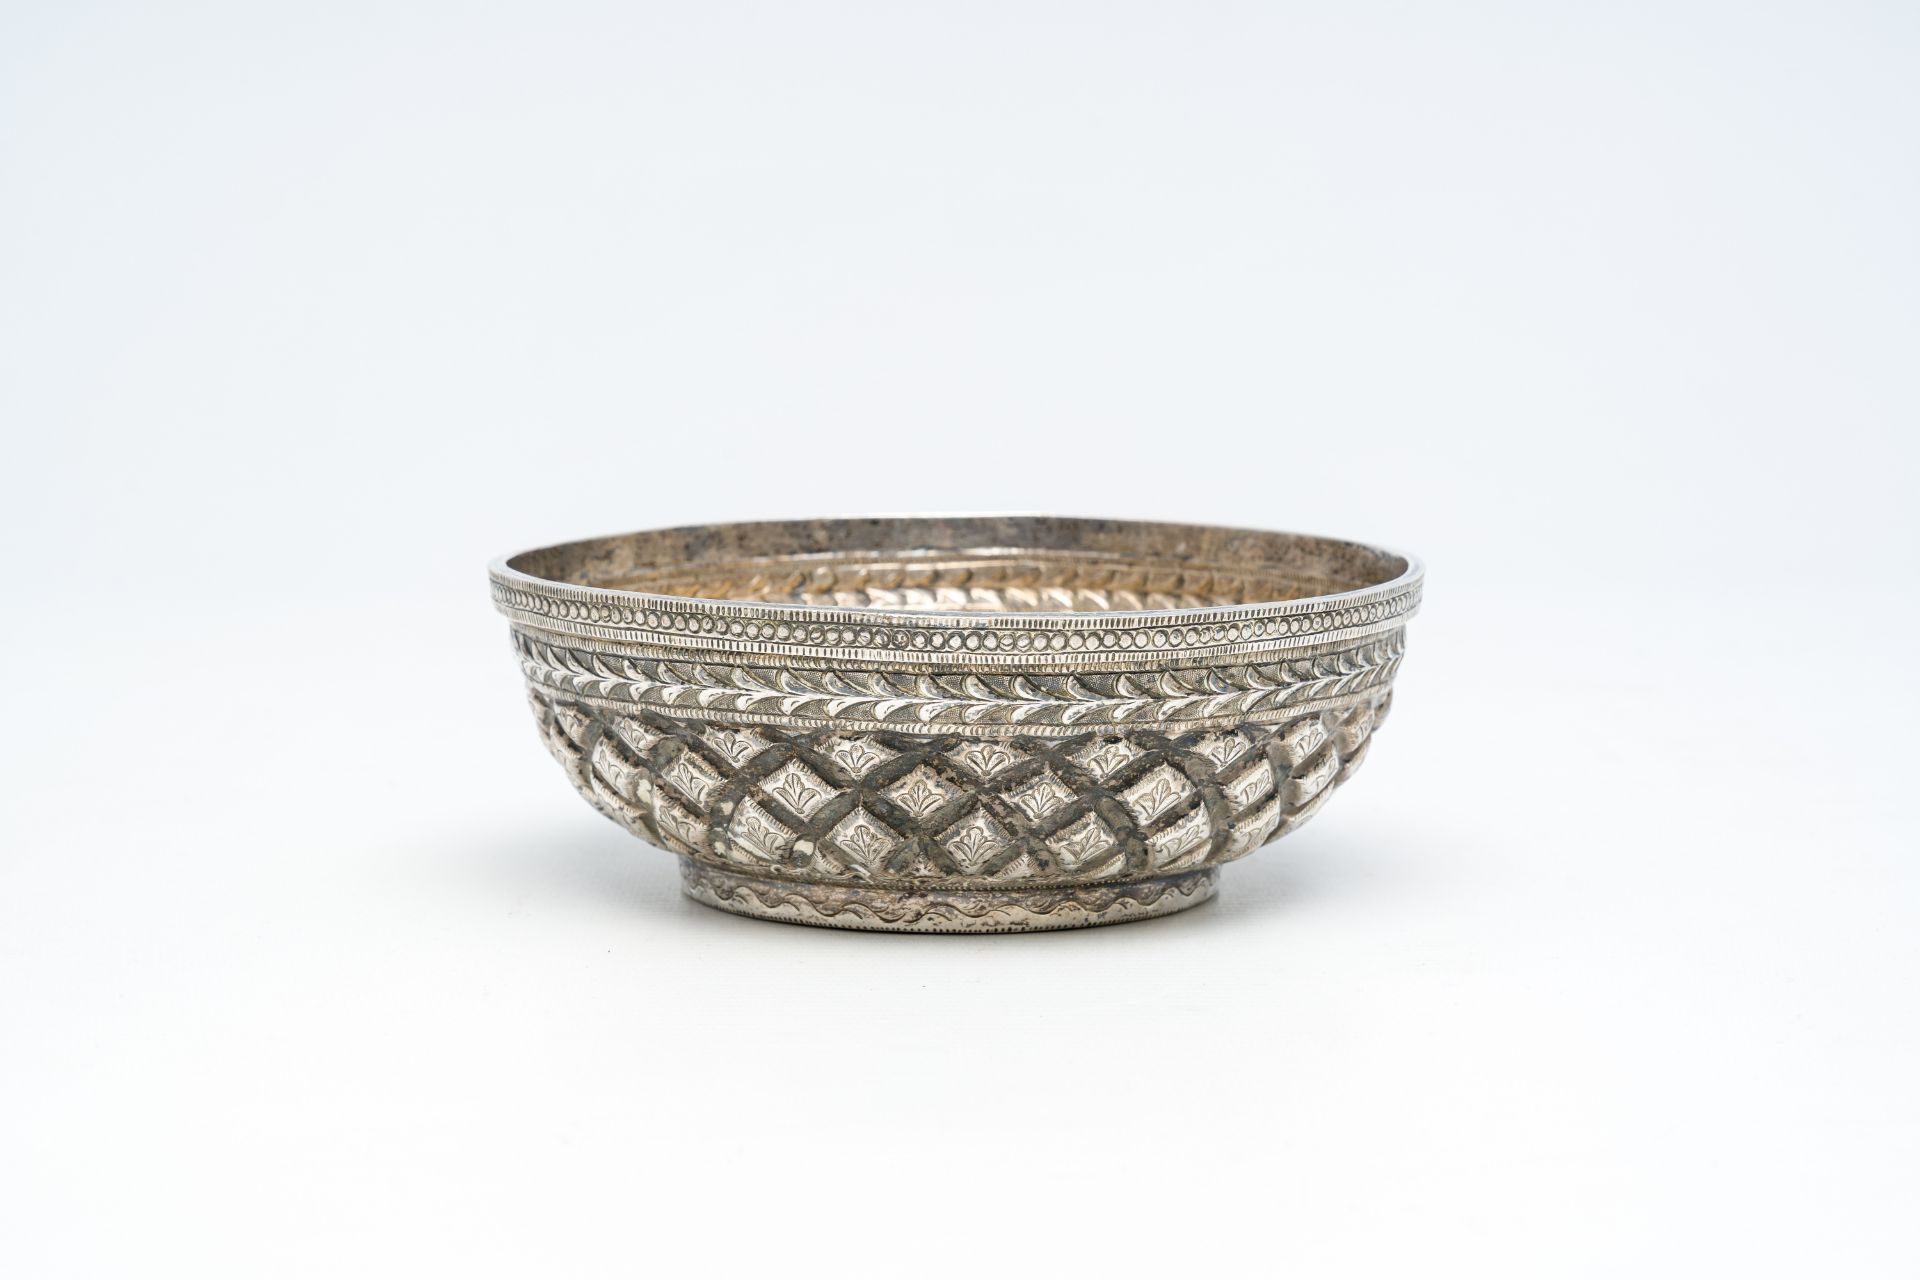 A Southeast Asian silver bowl, probably Laos or Sri Lanka, 19th/20th C.